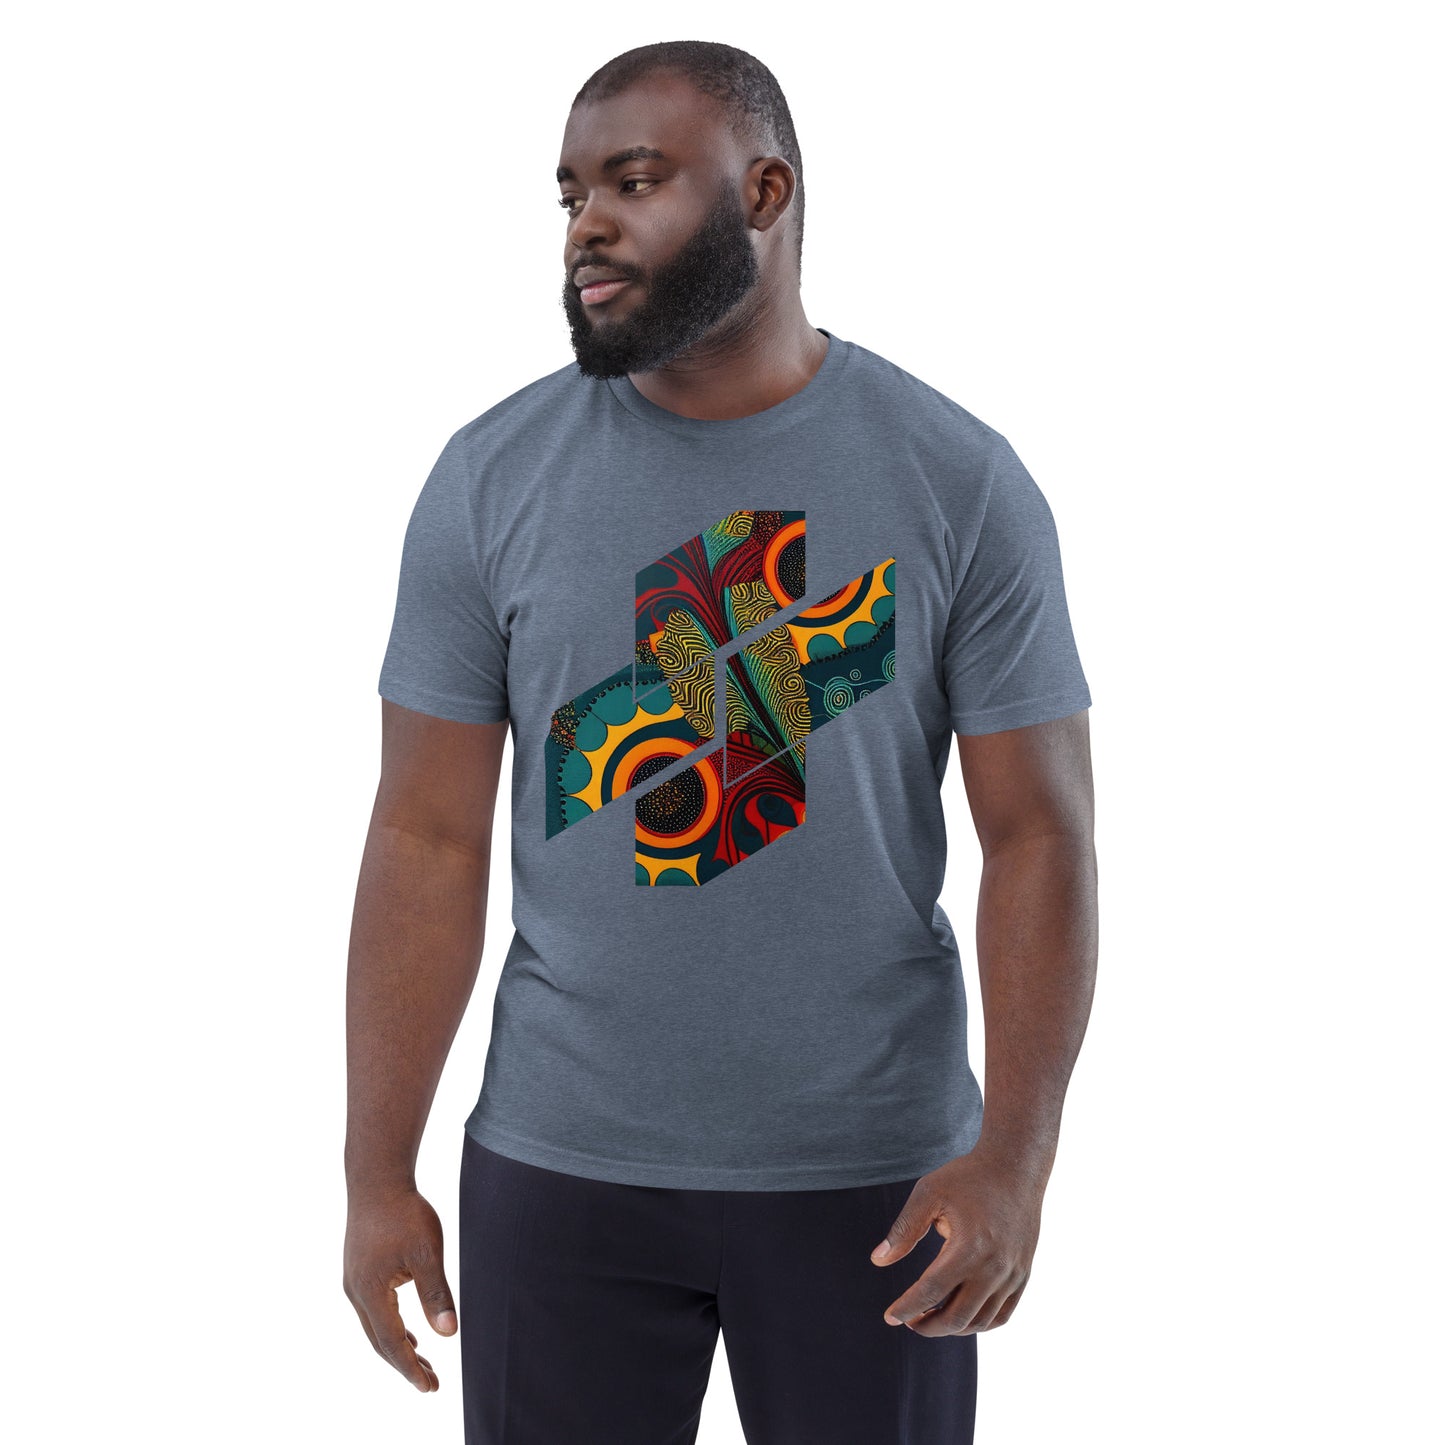 Stunning African Ankara-Inspired T-Shirt Design, Unisex Organic Cotton Tee